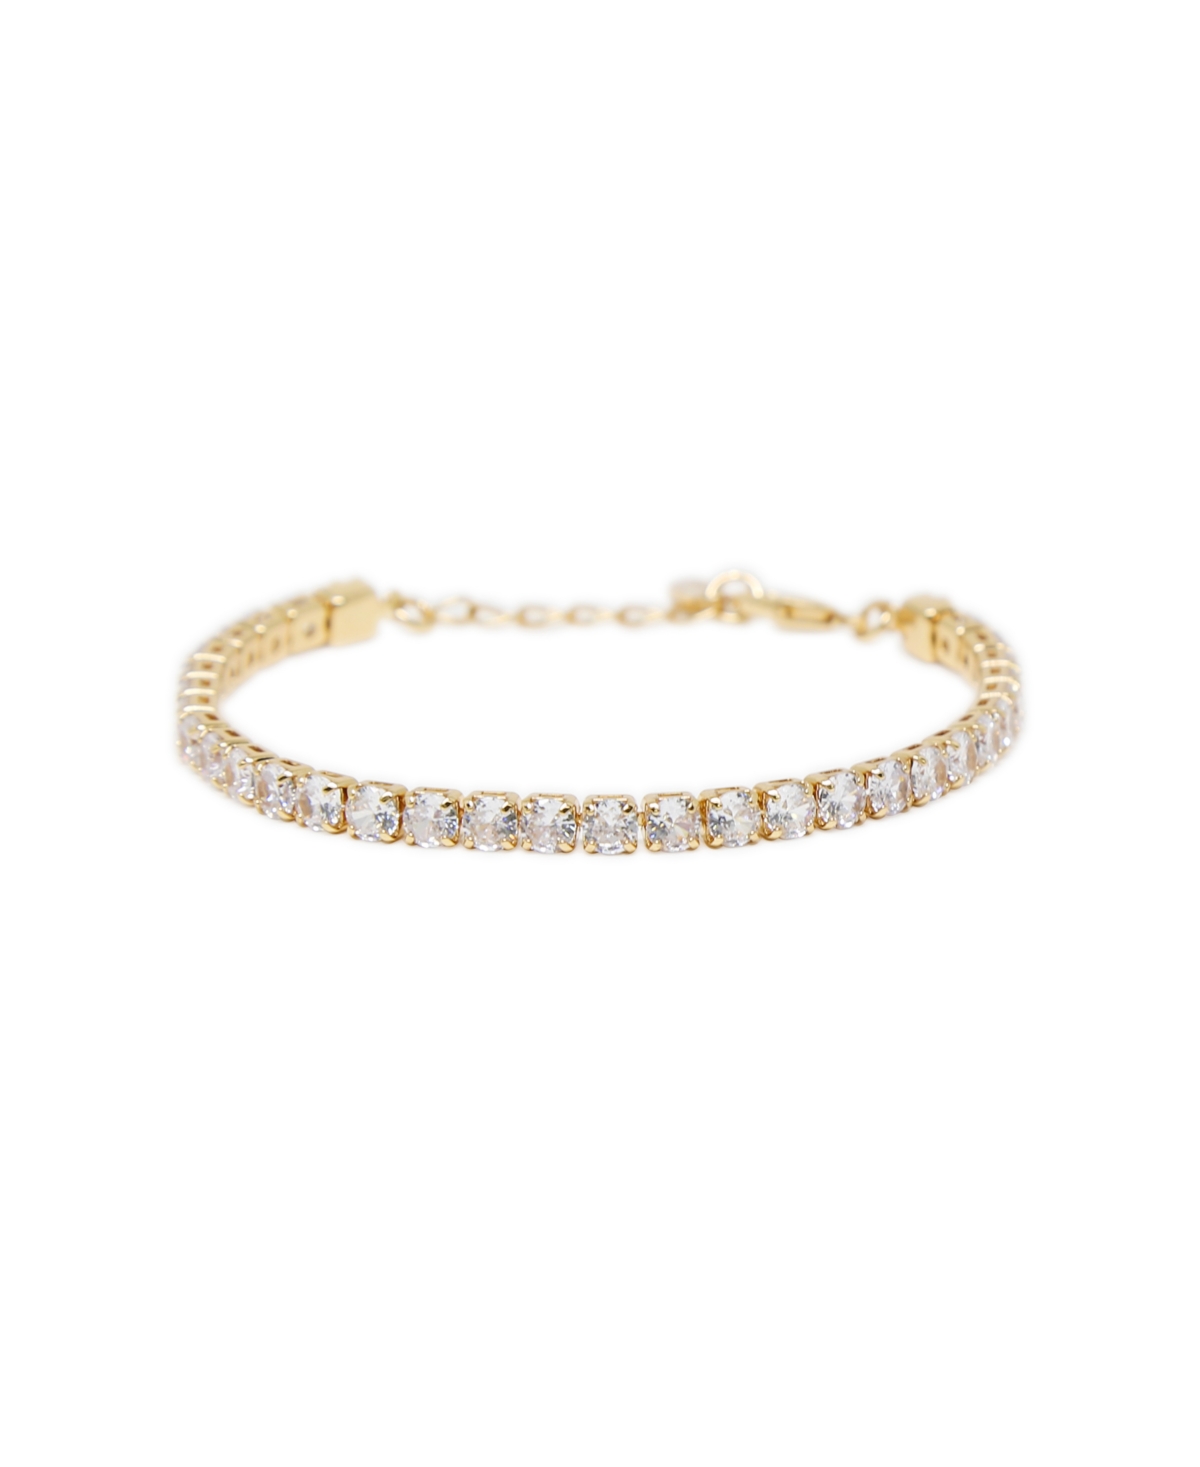 Giselle Sparkle Crystal Women's Bracelet - Gold